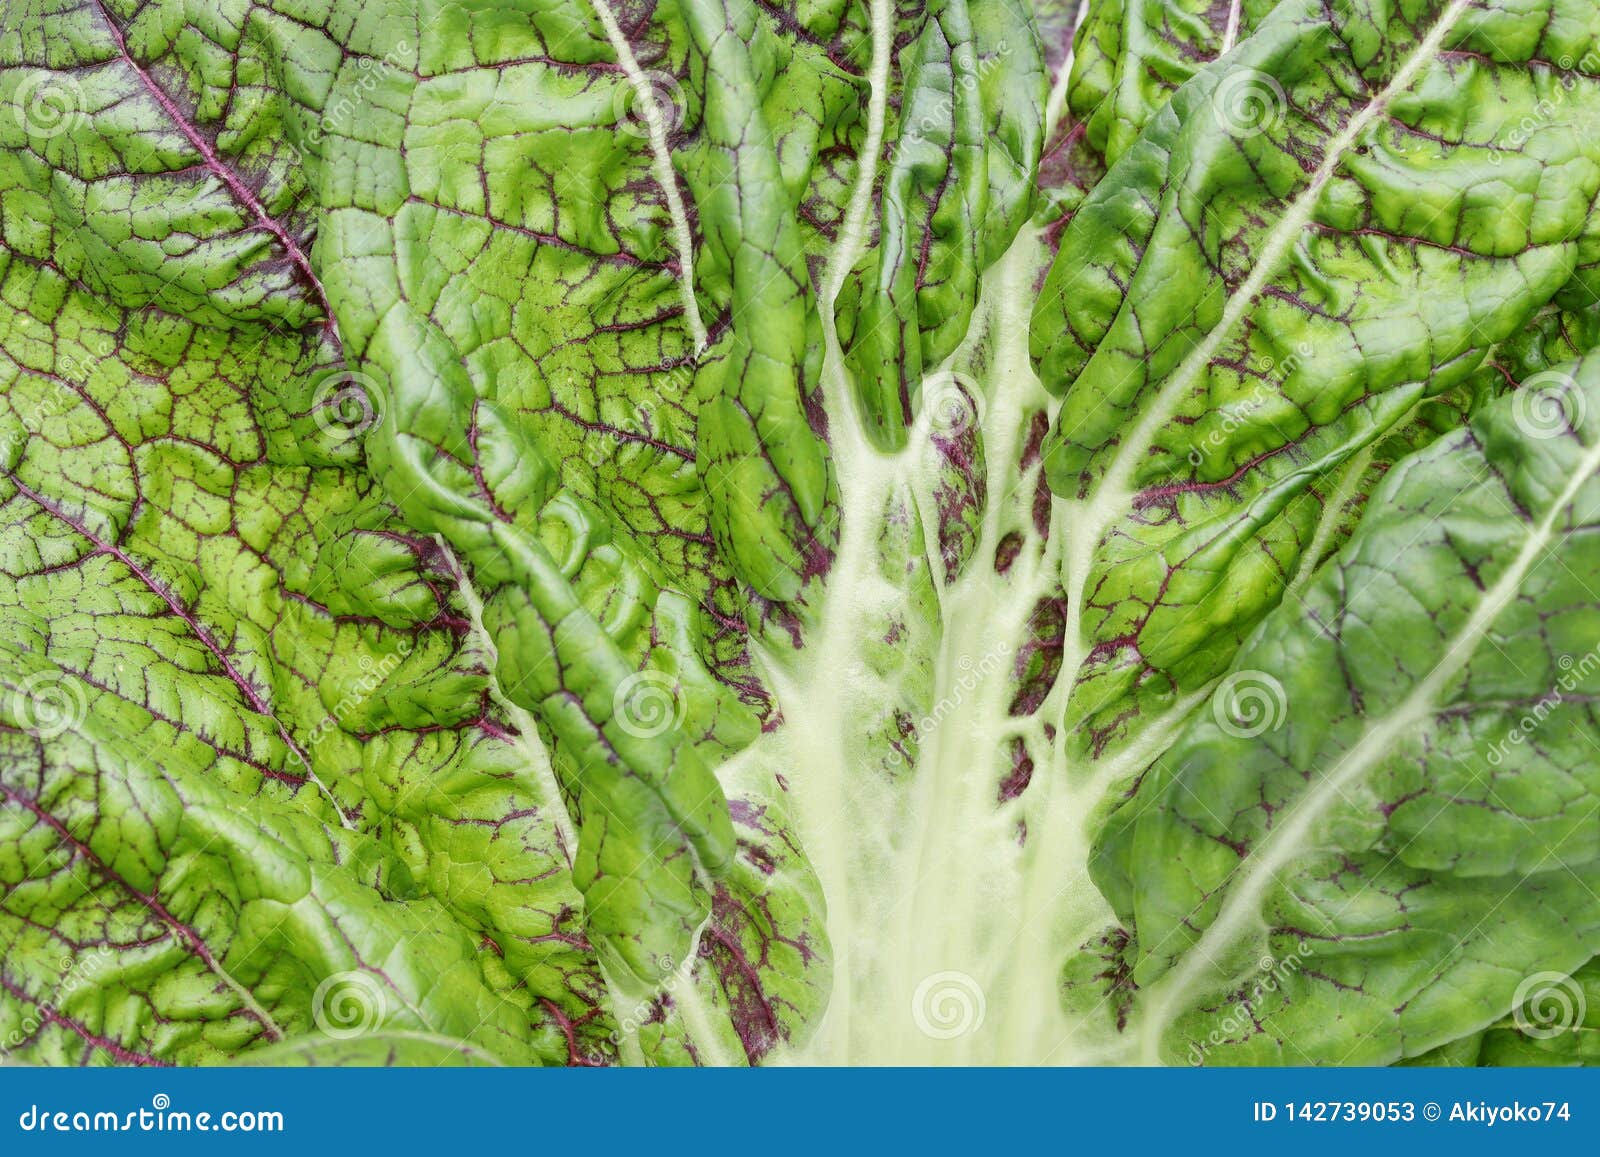 texture of green vegetable leaf full frame